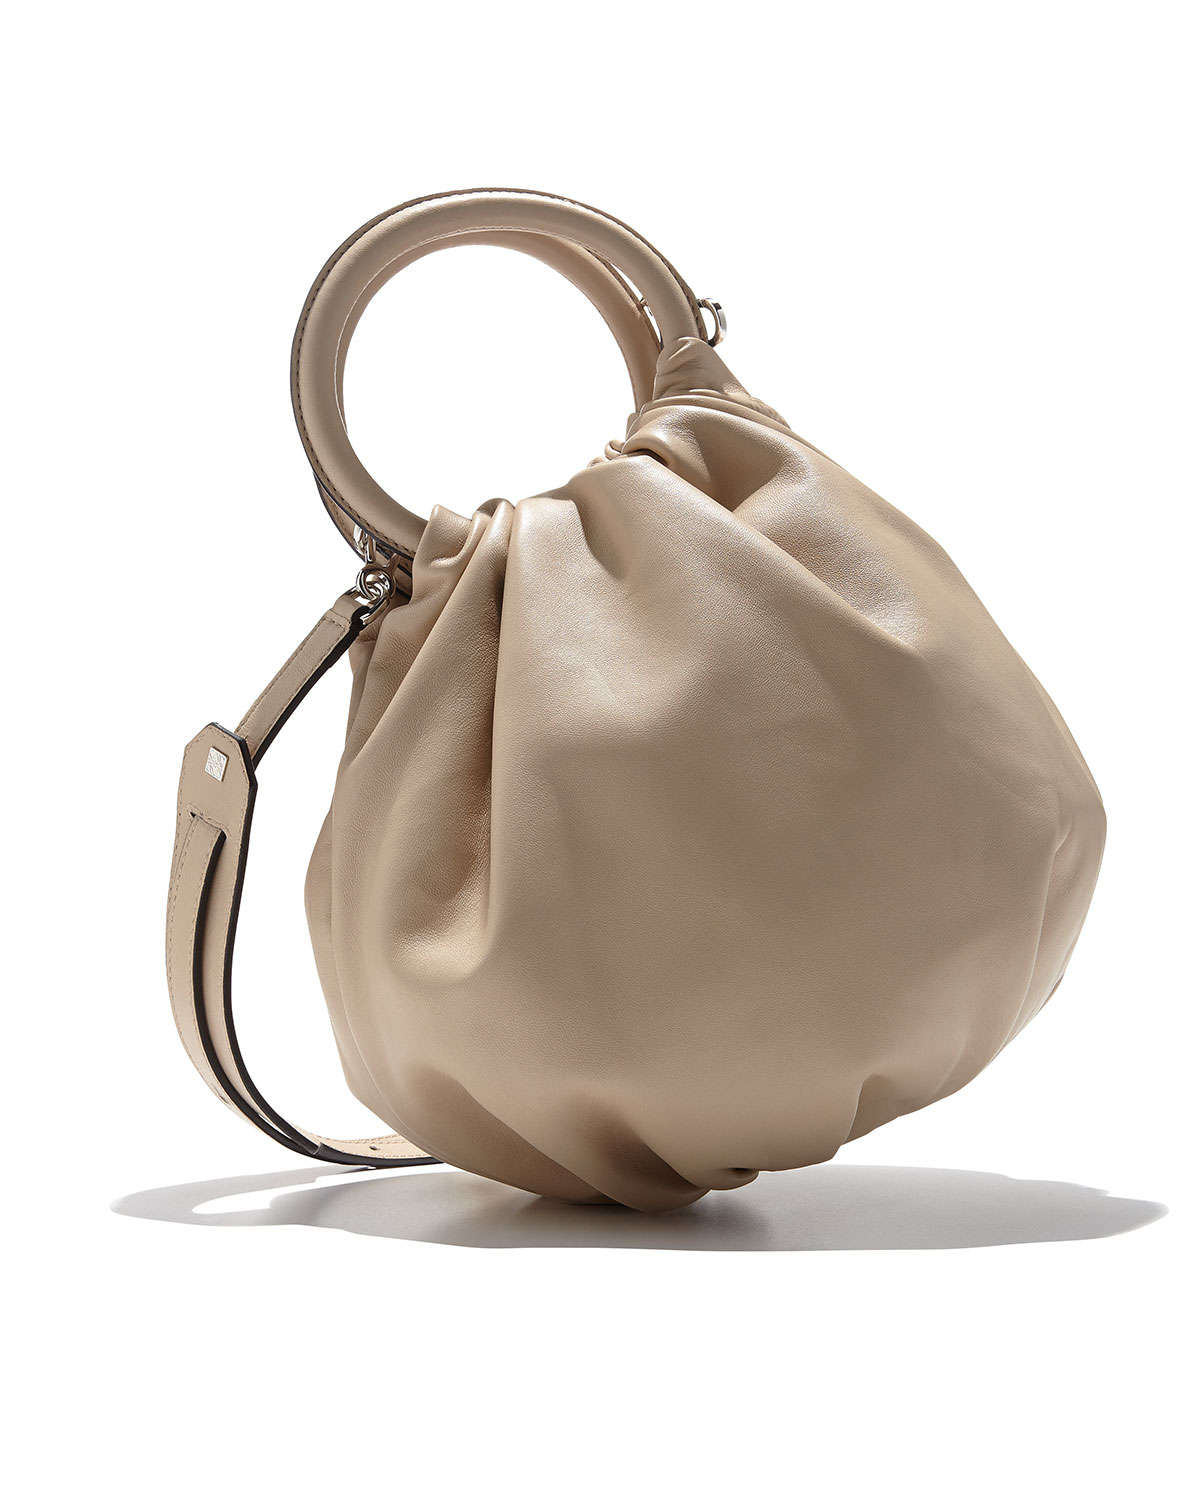 Lyst - Loewe Bounce Gathered Lambskin Bag in Natural